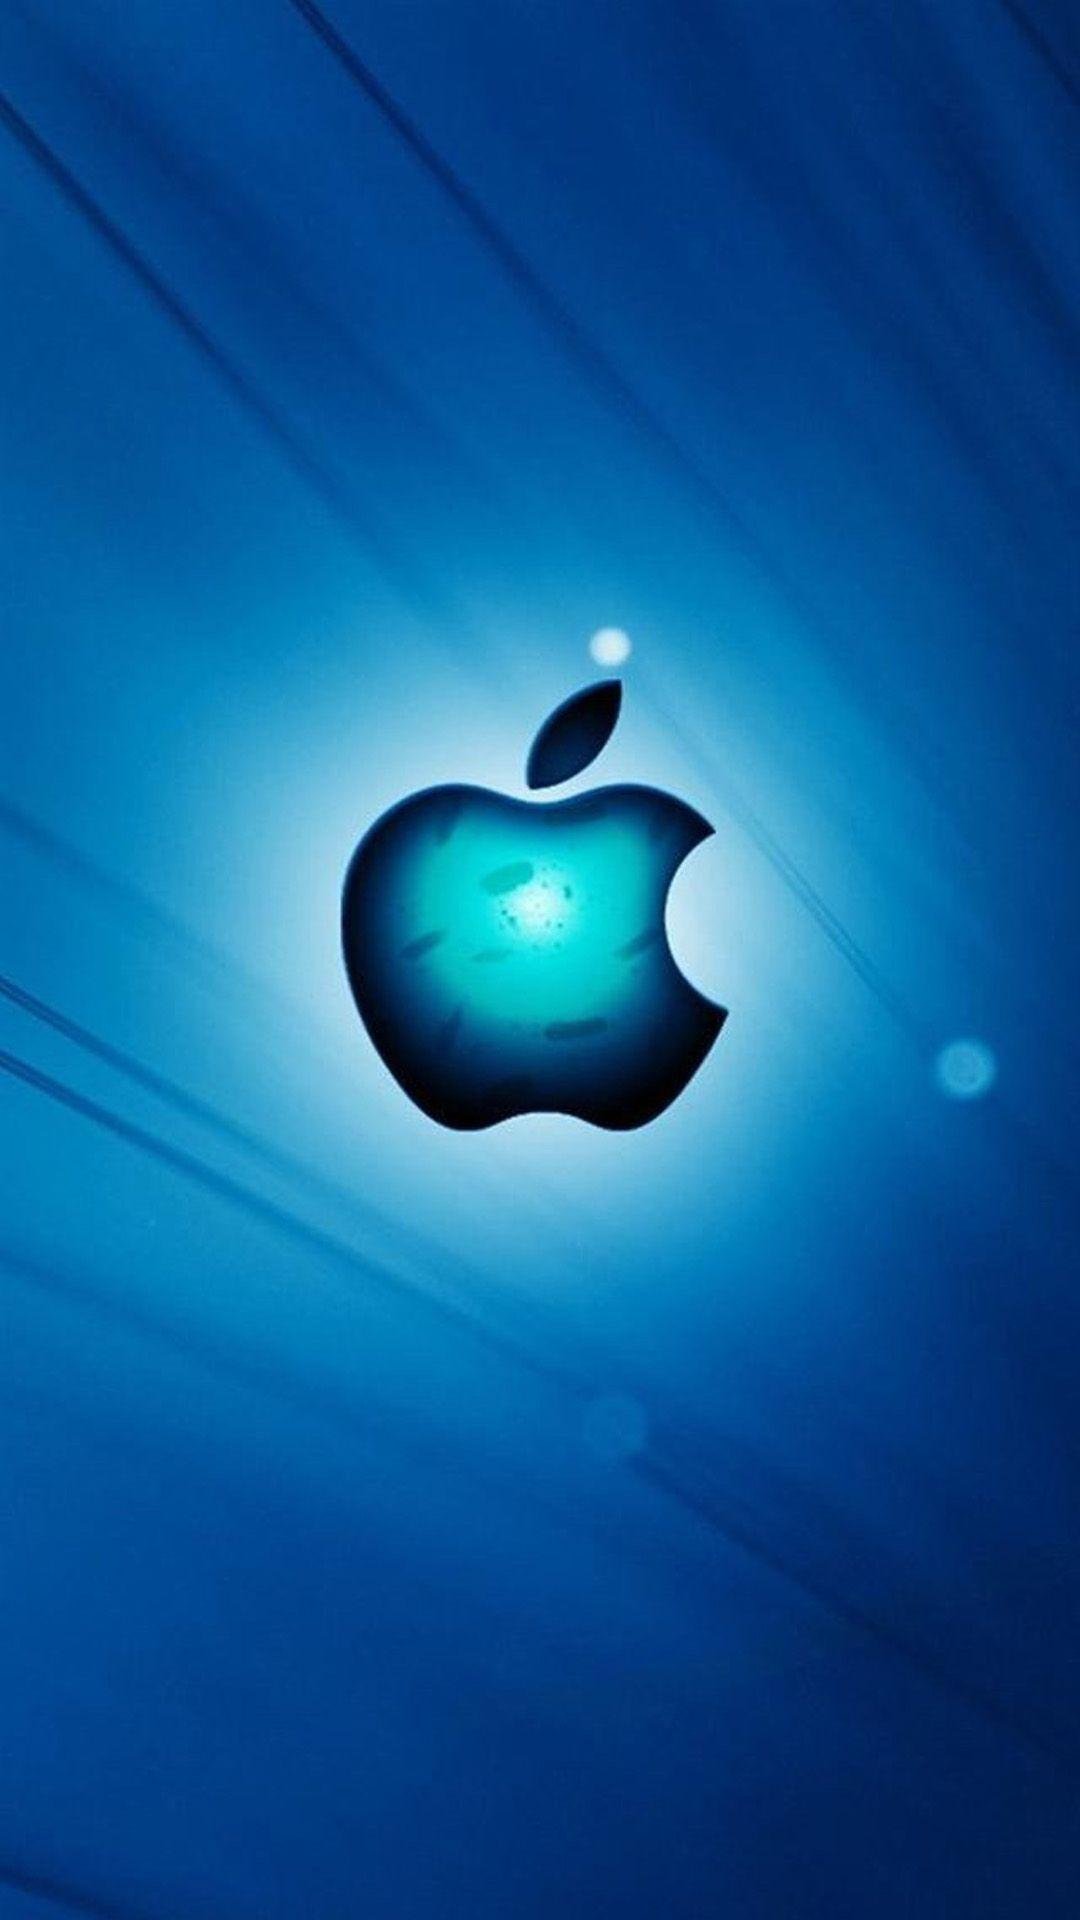 wallpaper for iphones  Download Apple blue for iPhone 4  Apple logo  wallpaper iphone Apple wallpaper Apple ipad wallpaper